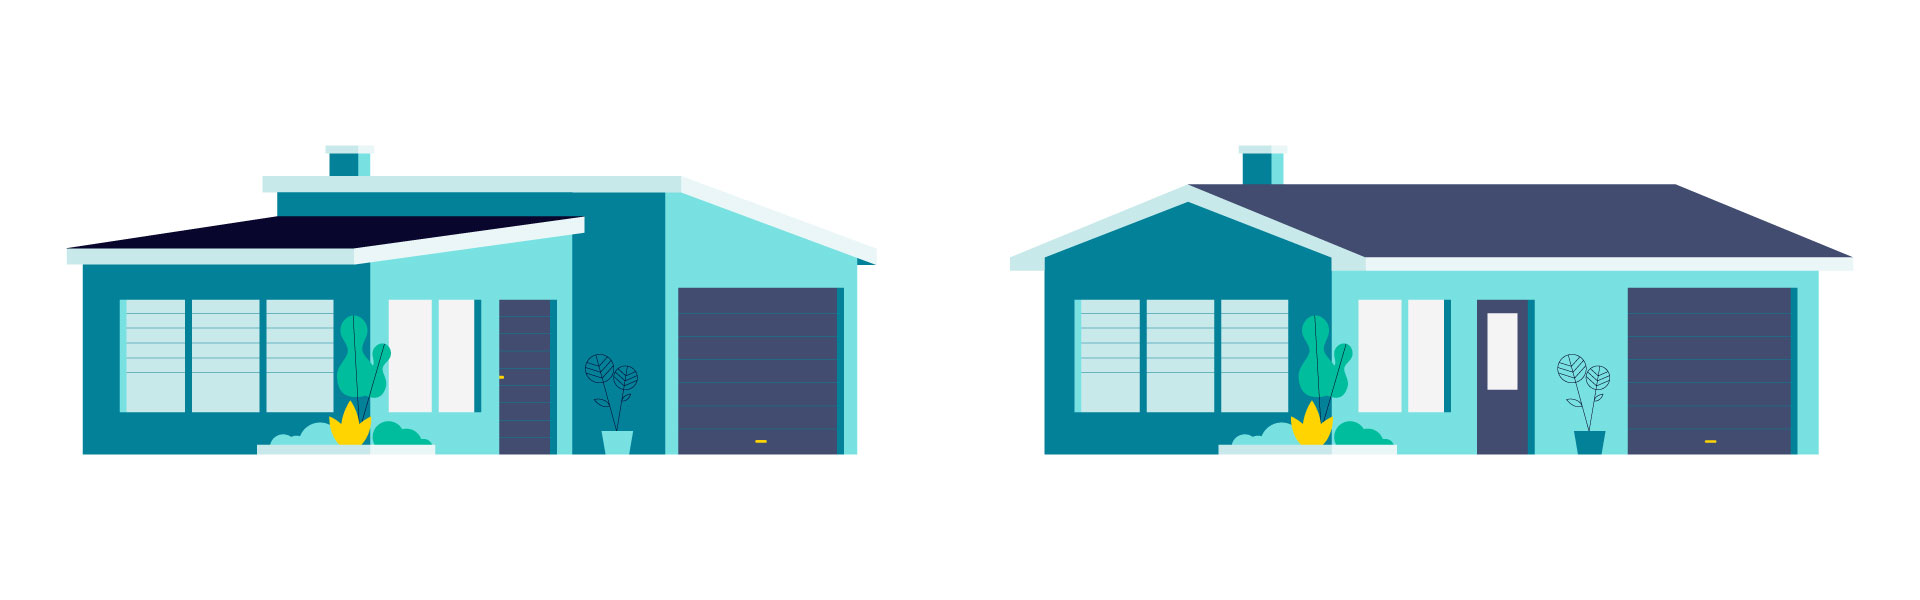 Illustration of two modern houses